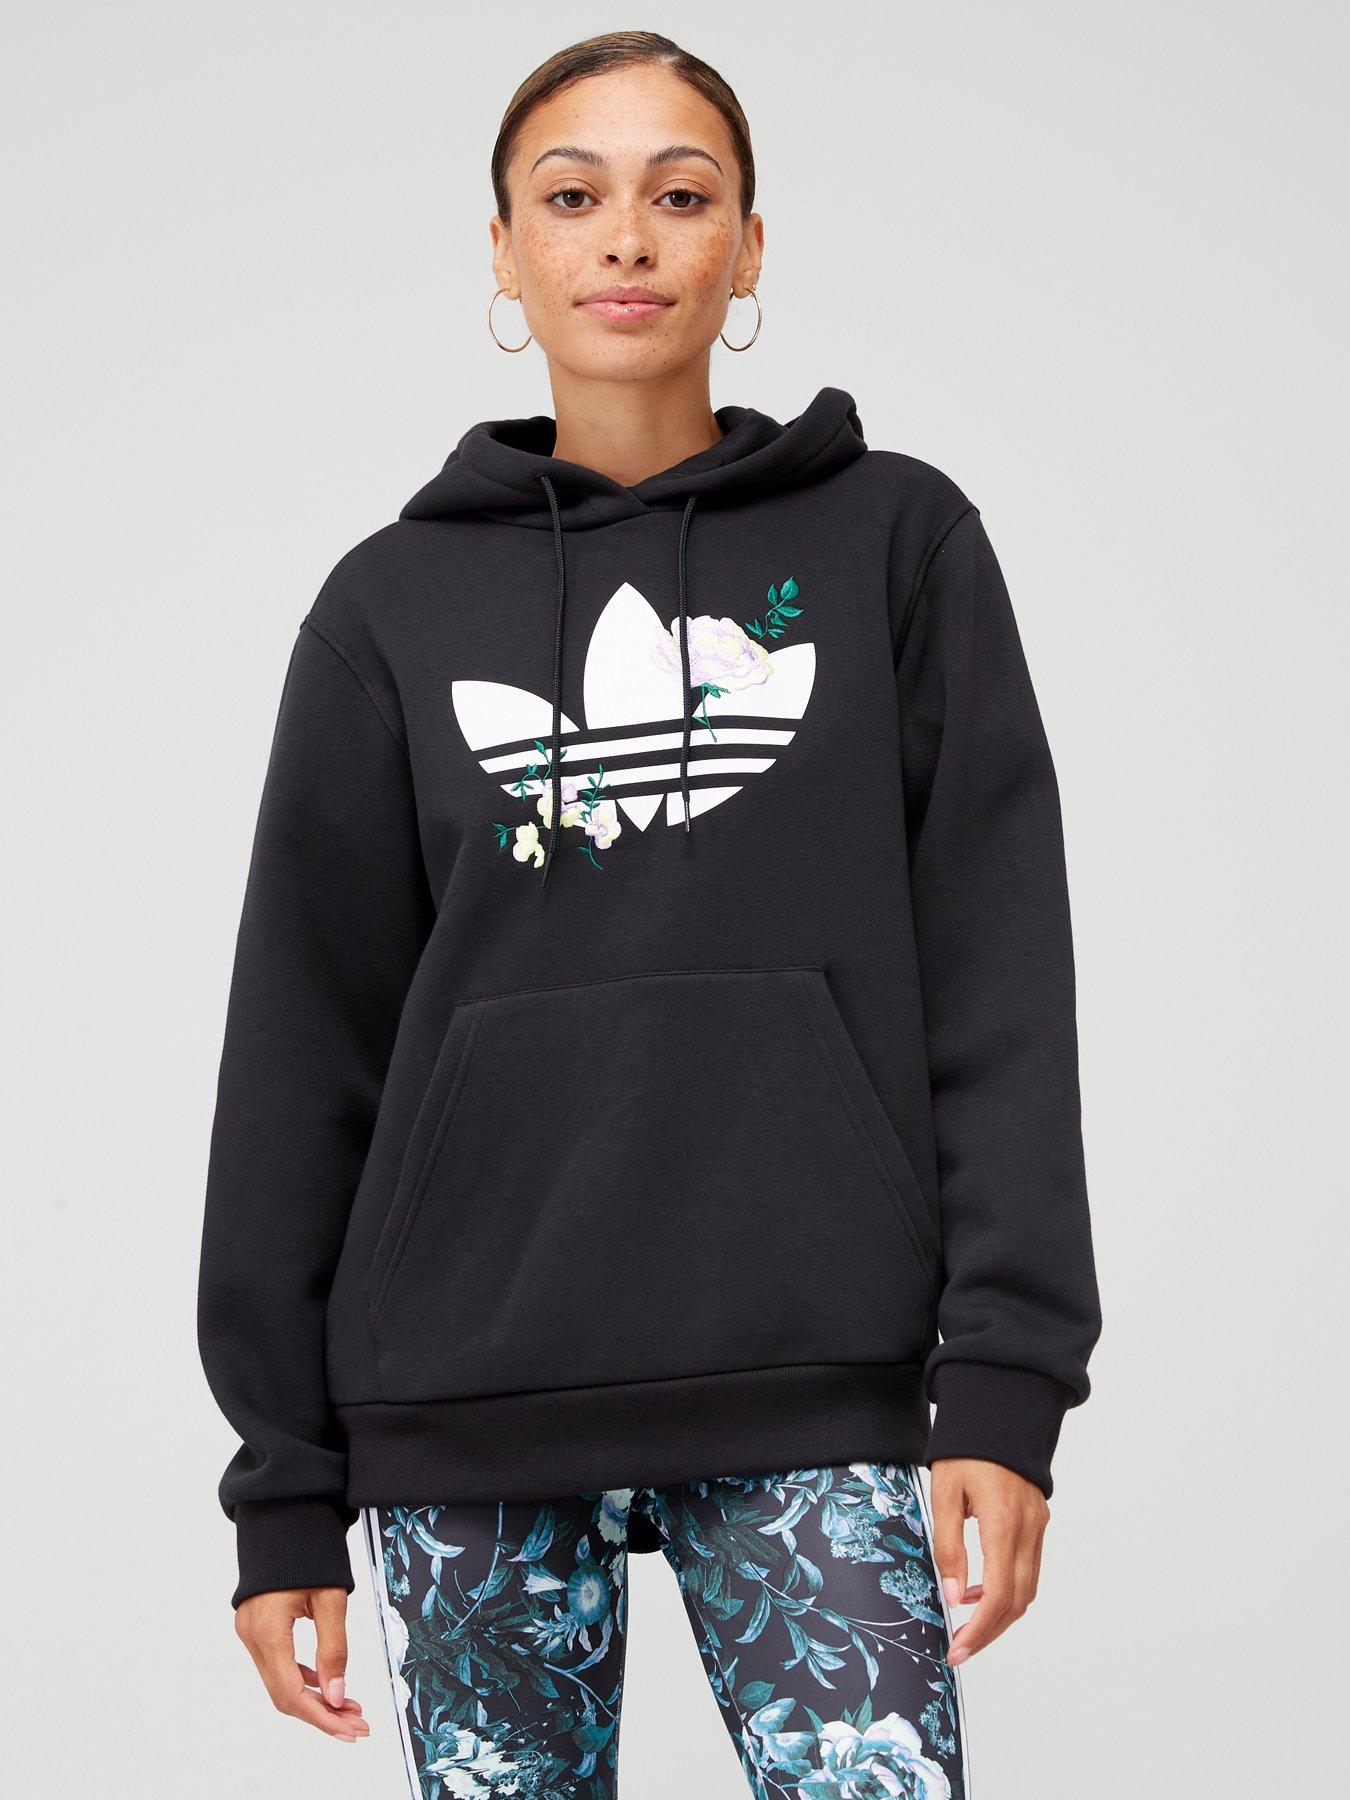 | | Hoodies | | Adidas Ireland & sweatshirts Black Women Very